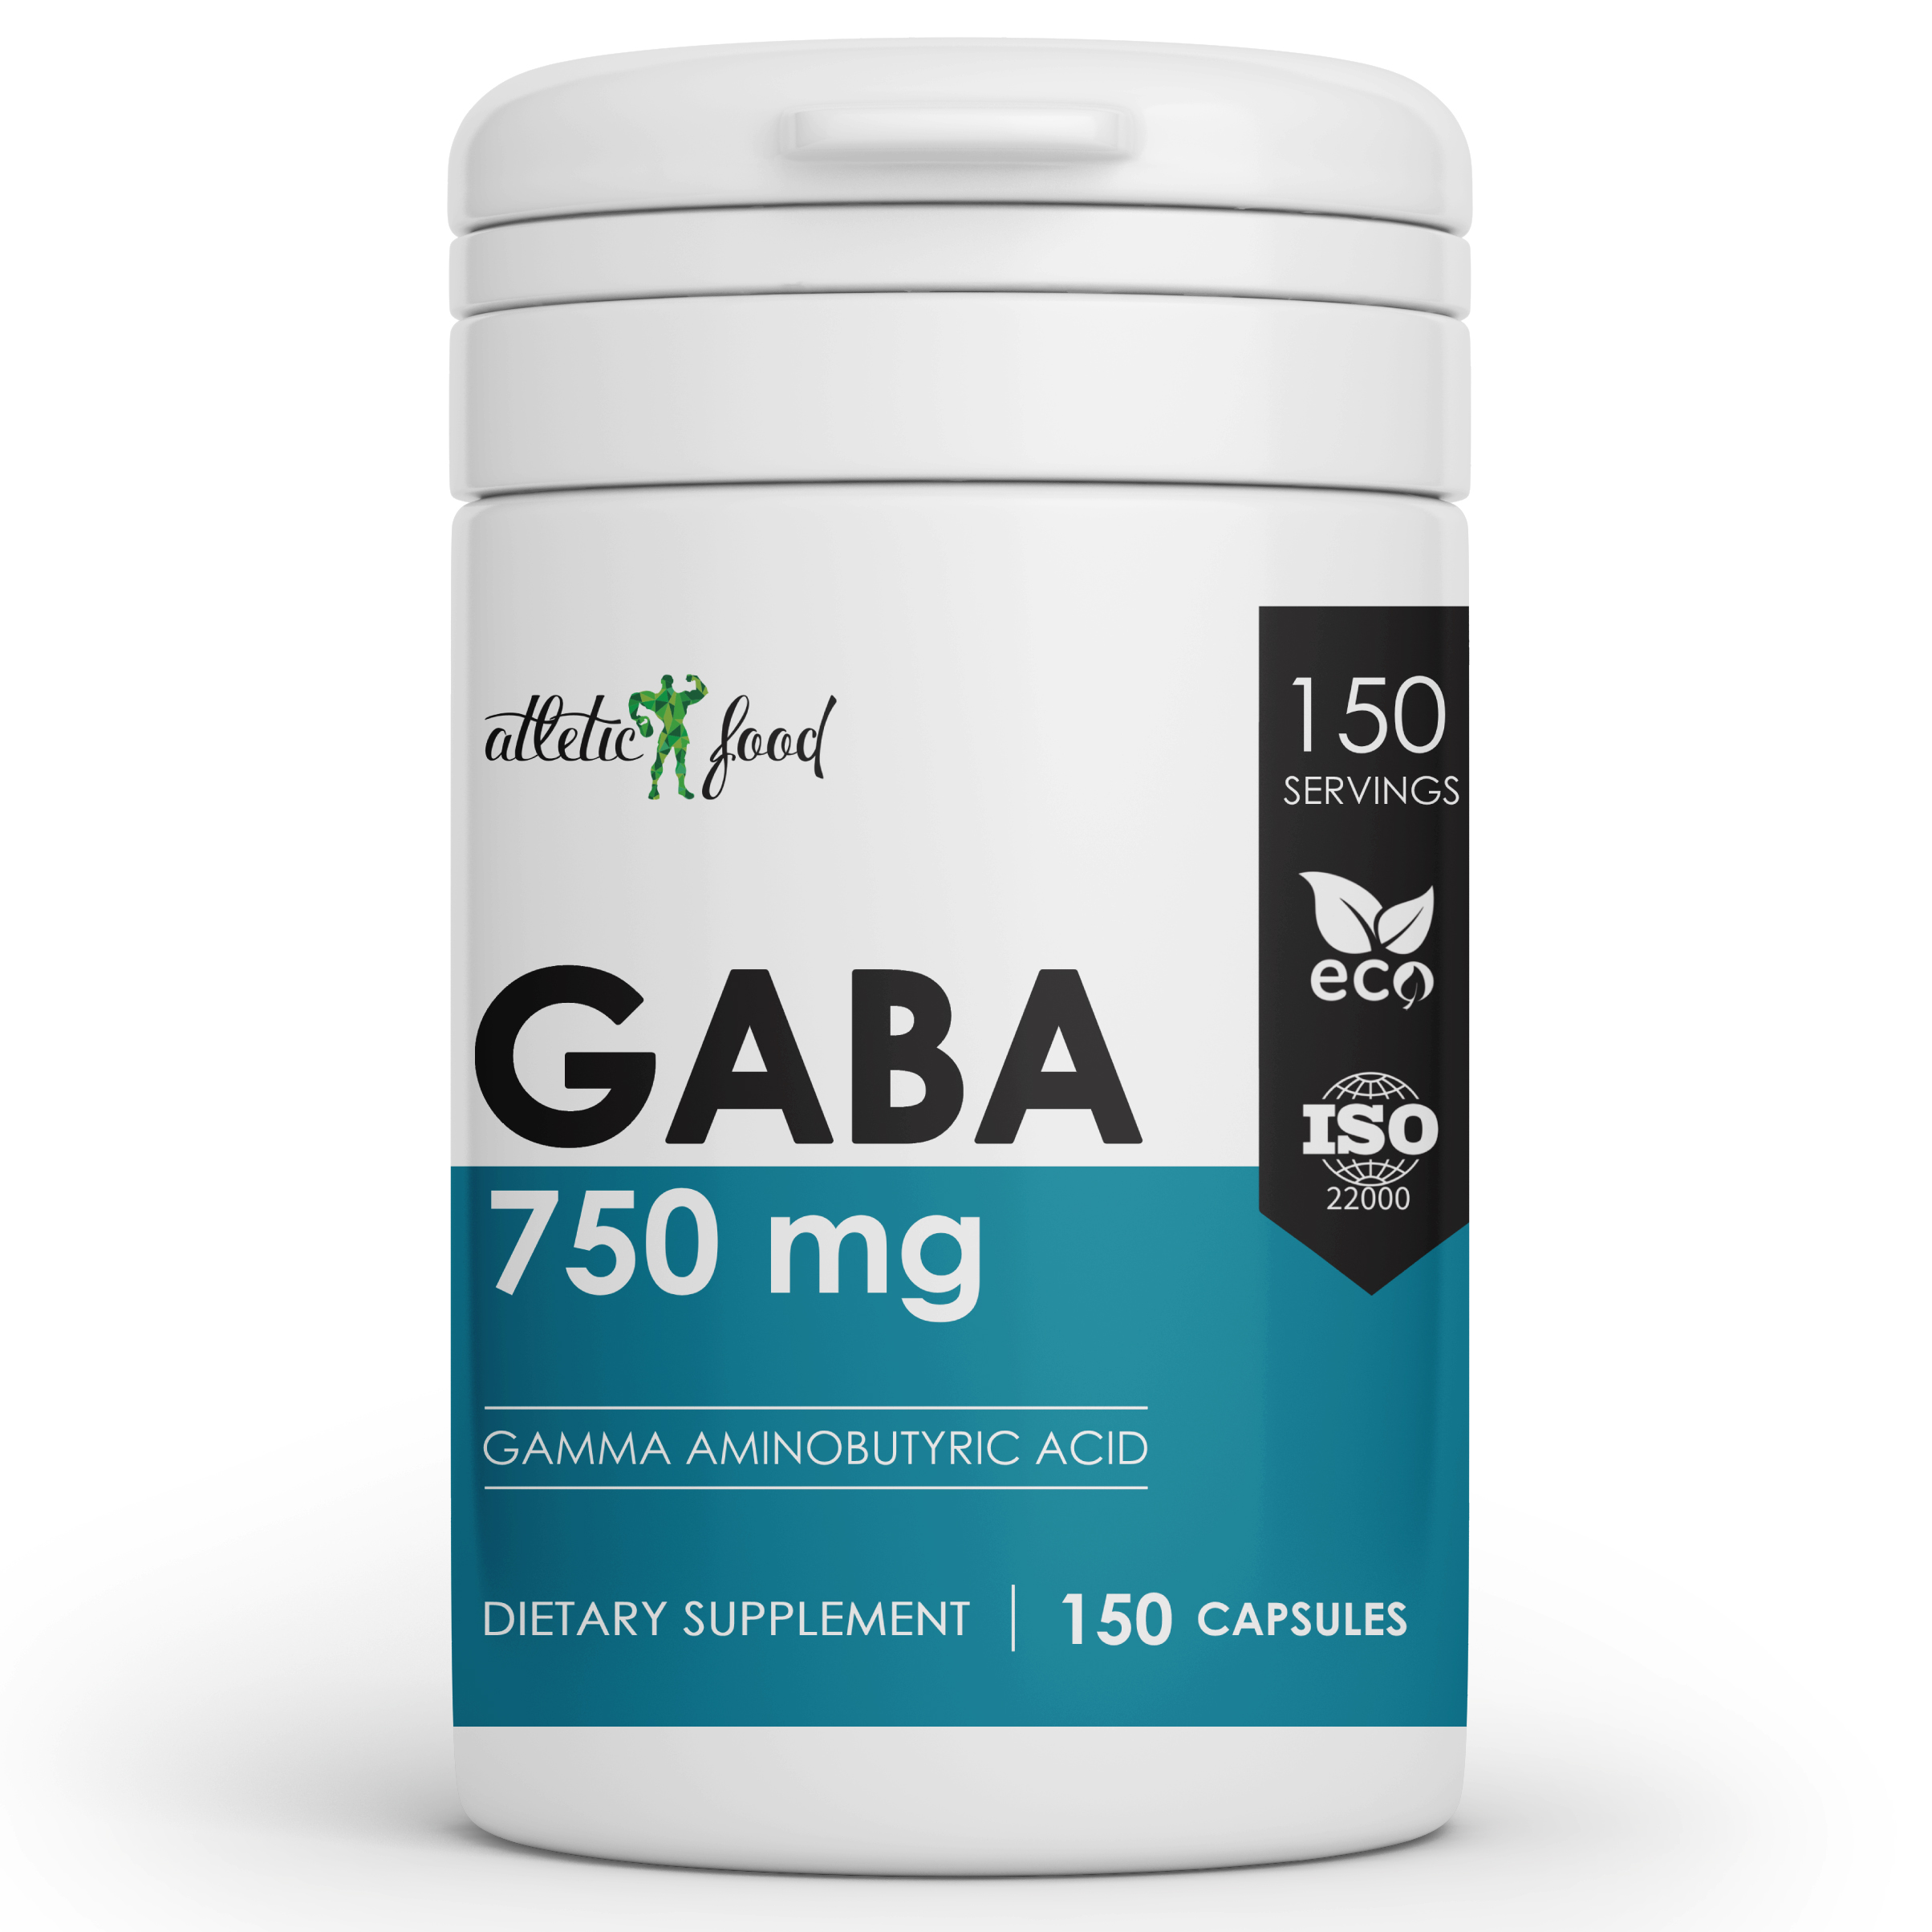 ГАБА, ГАМК Atletic Food GABA (Gamma Aminobutyric Acid) 750 mg - 150 капсул